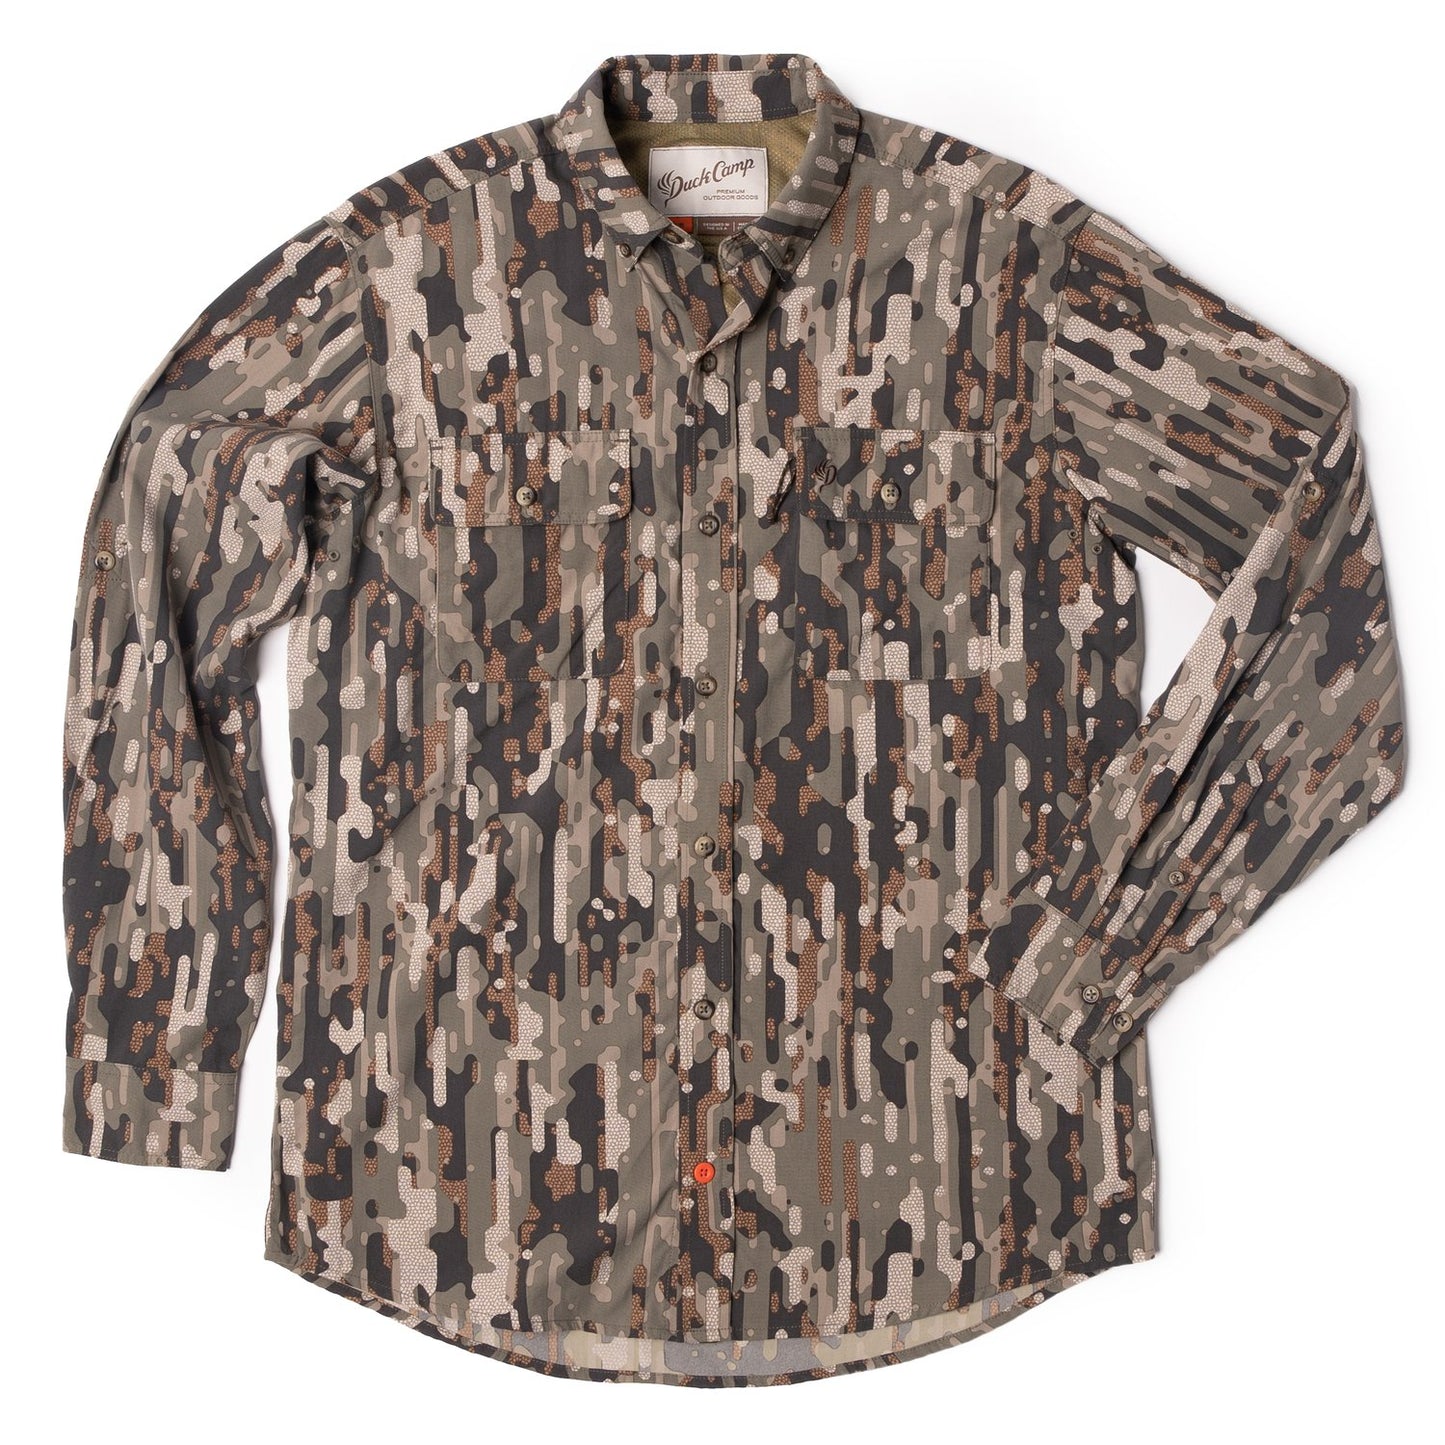 Duck Camp Woodland Lightweight Hunting Shirt